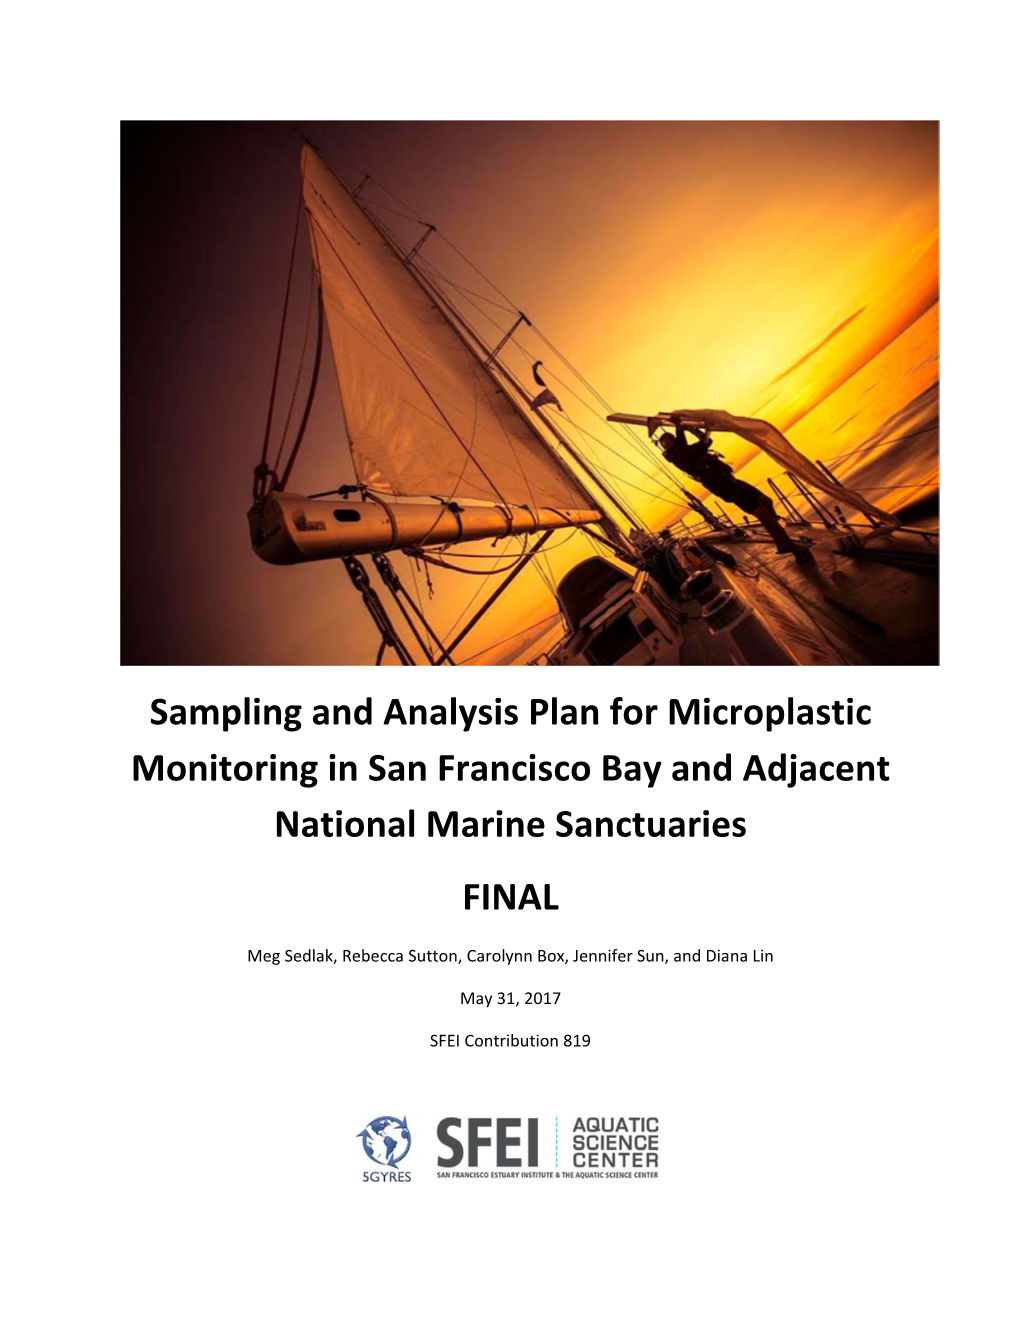 Sampling and Analysis Plan for Microplastic Monitoring in San Francisco Bay and Adjacent National Marine Sanctuaries